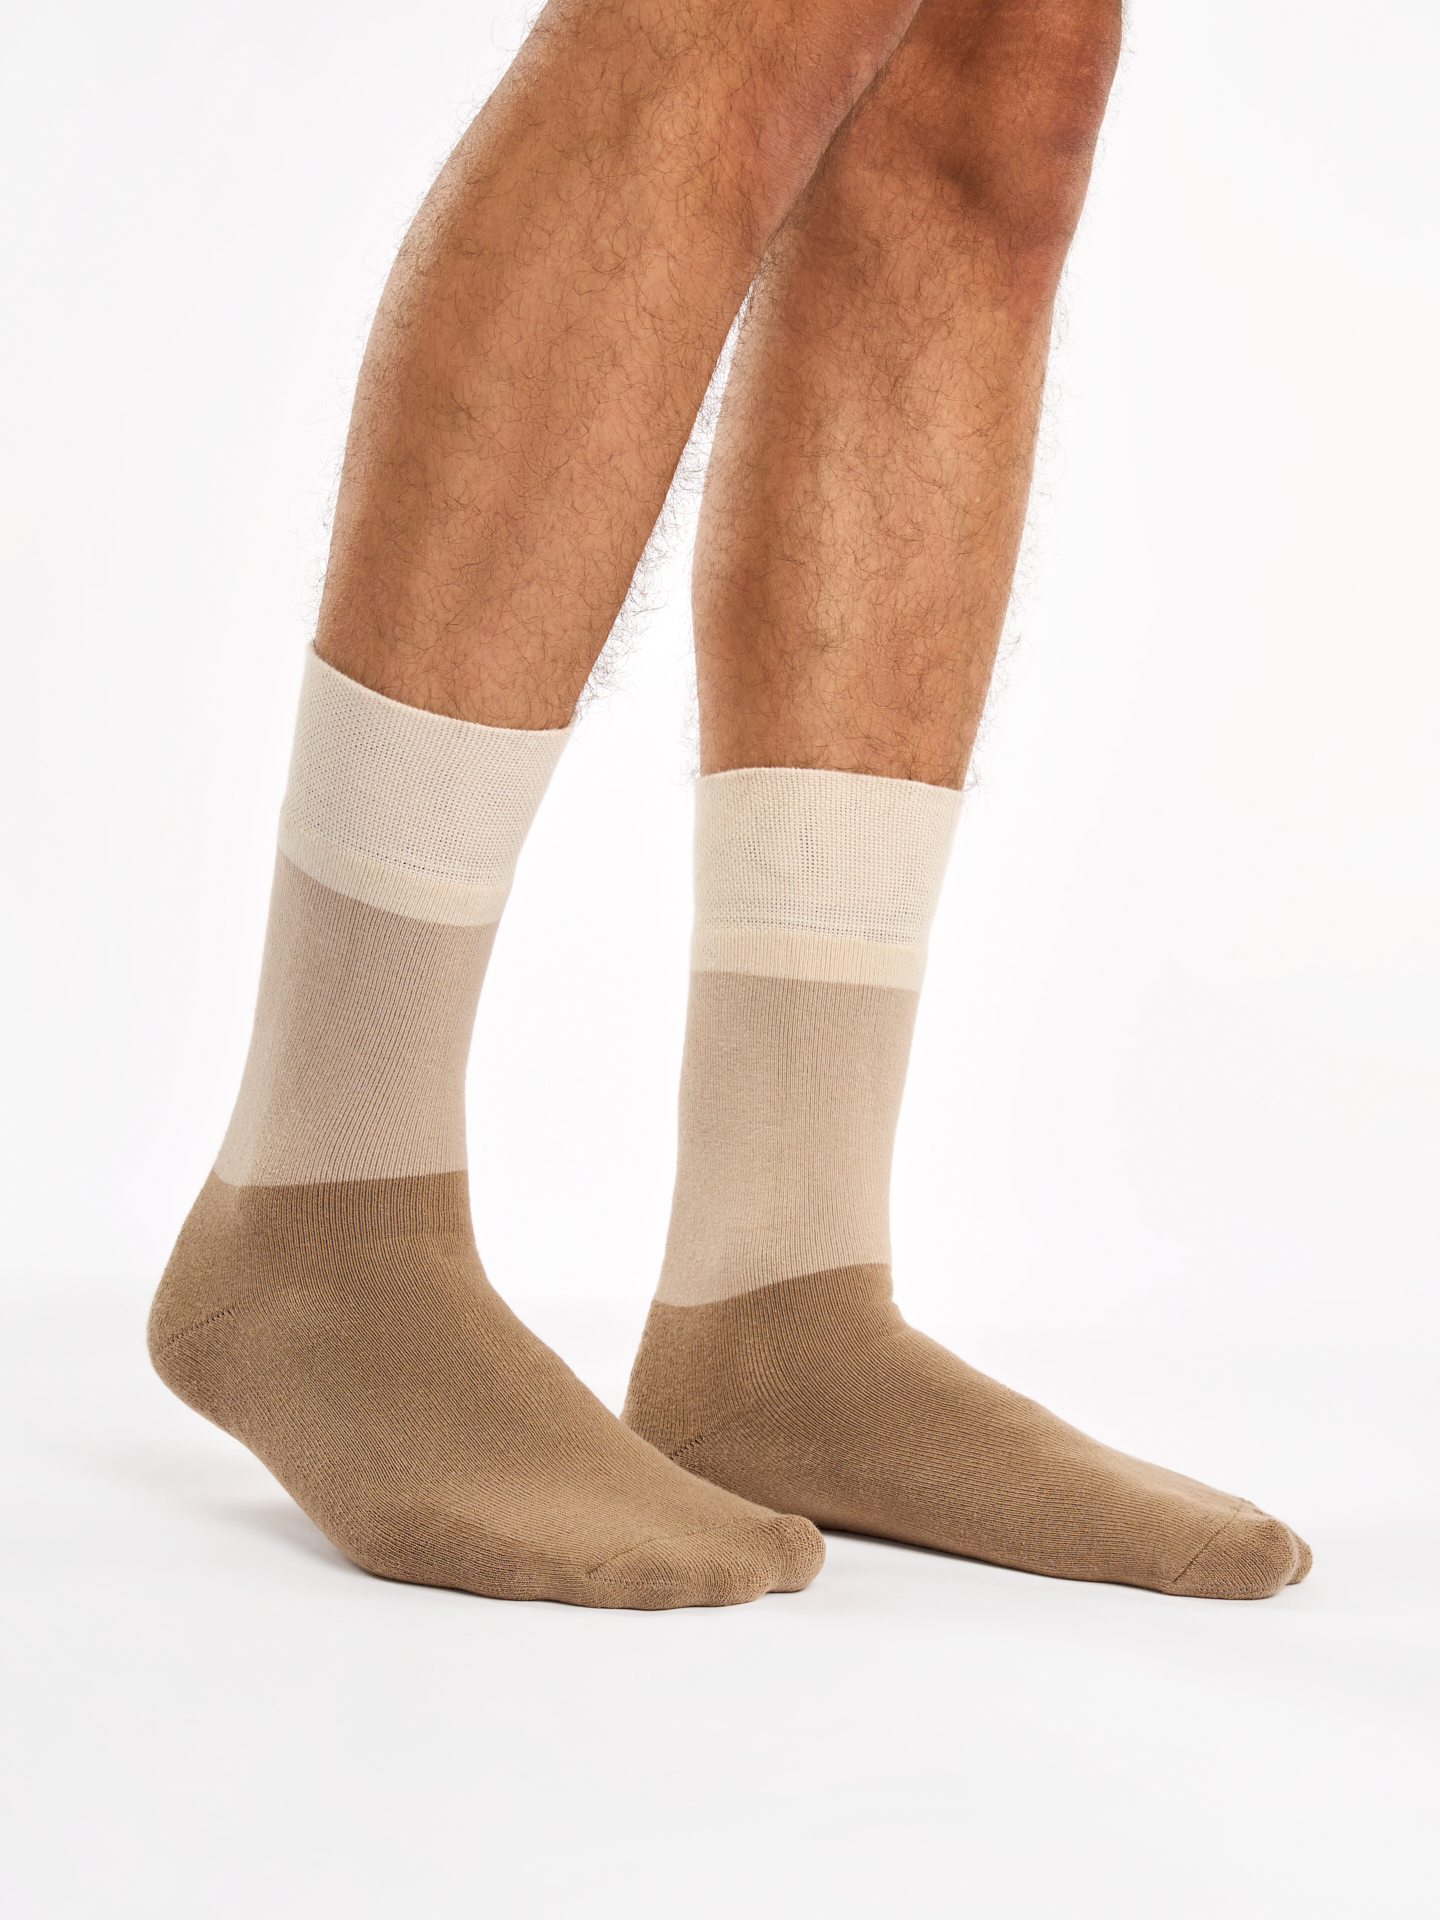 Warm Socks Beige Tri-color